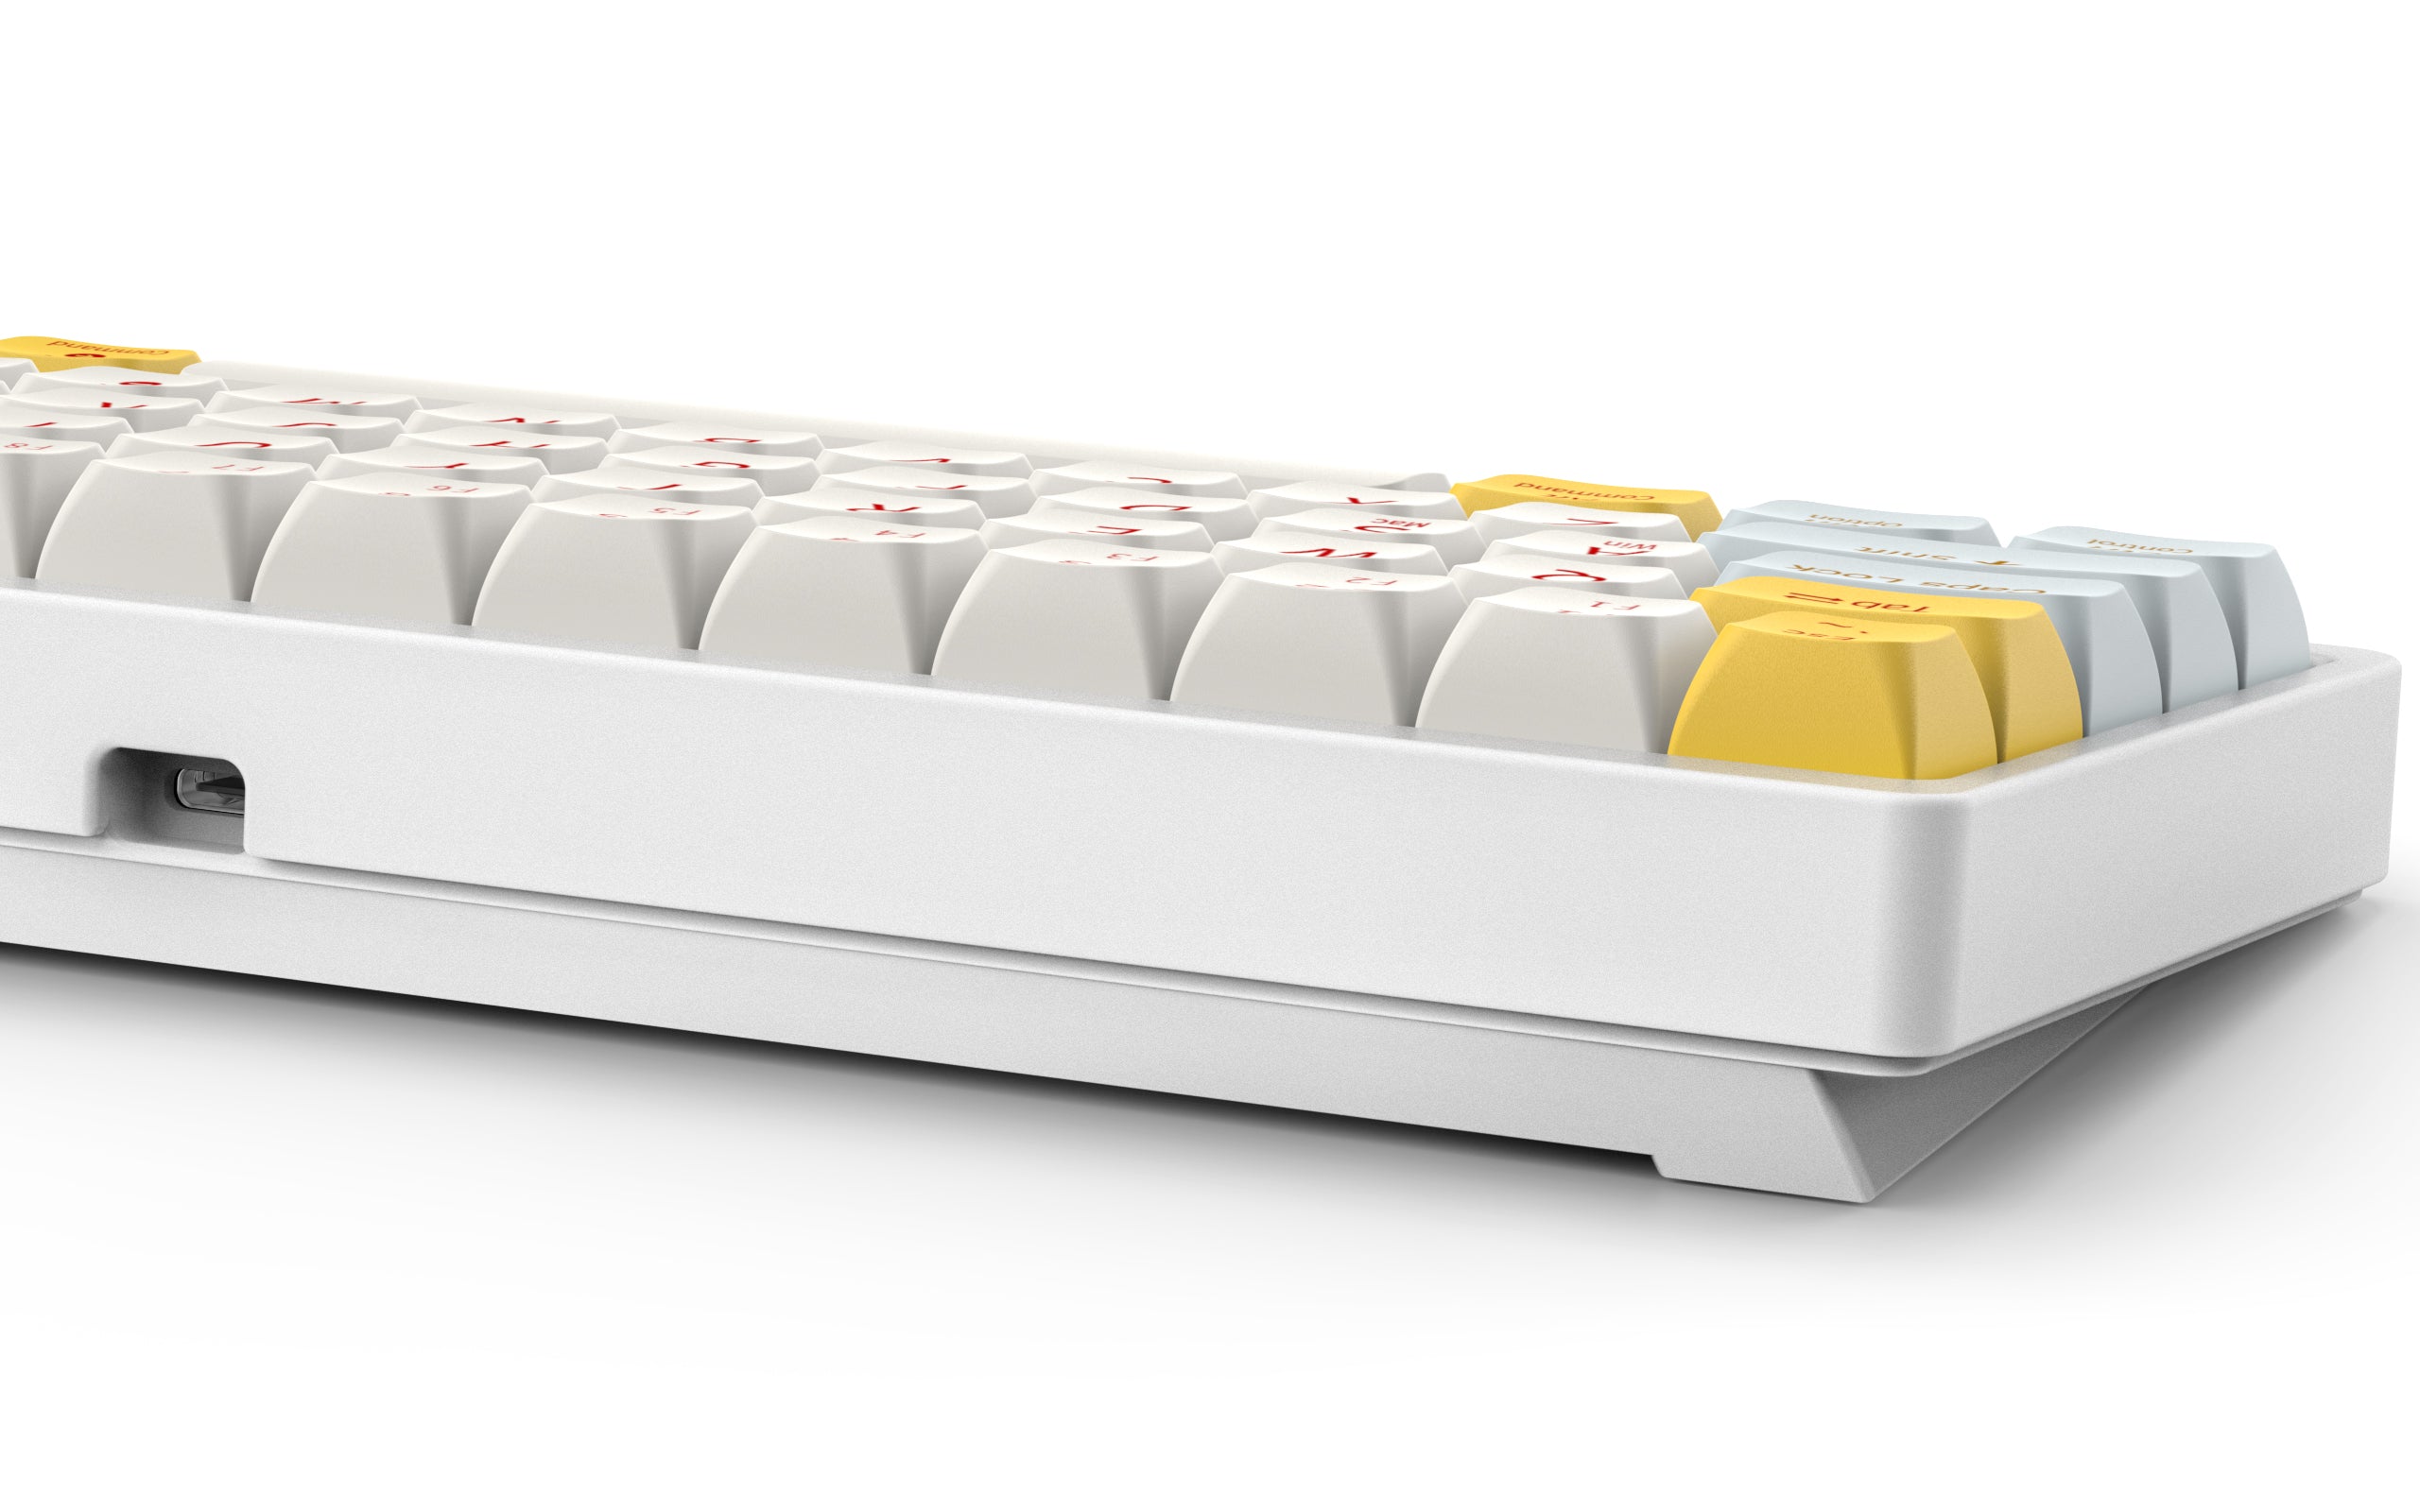 C641 mechanical keyboard - type-c